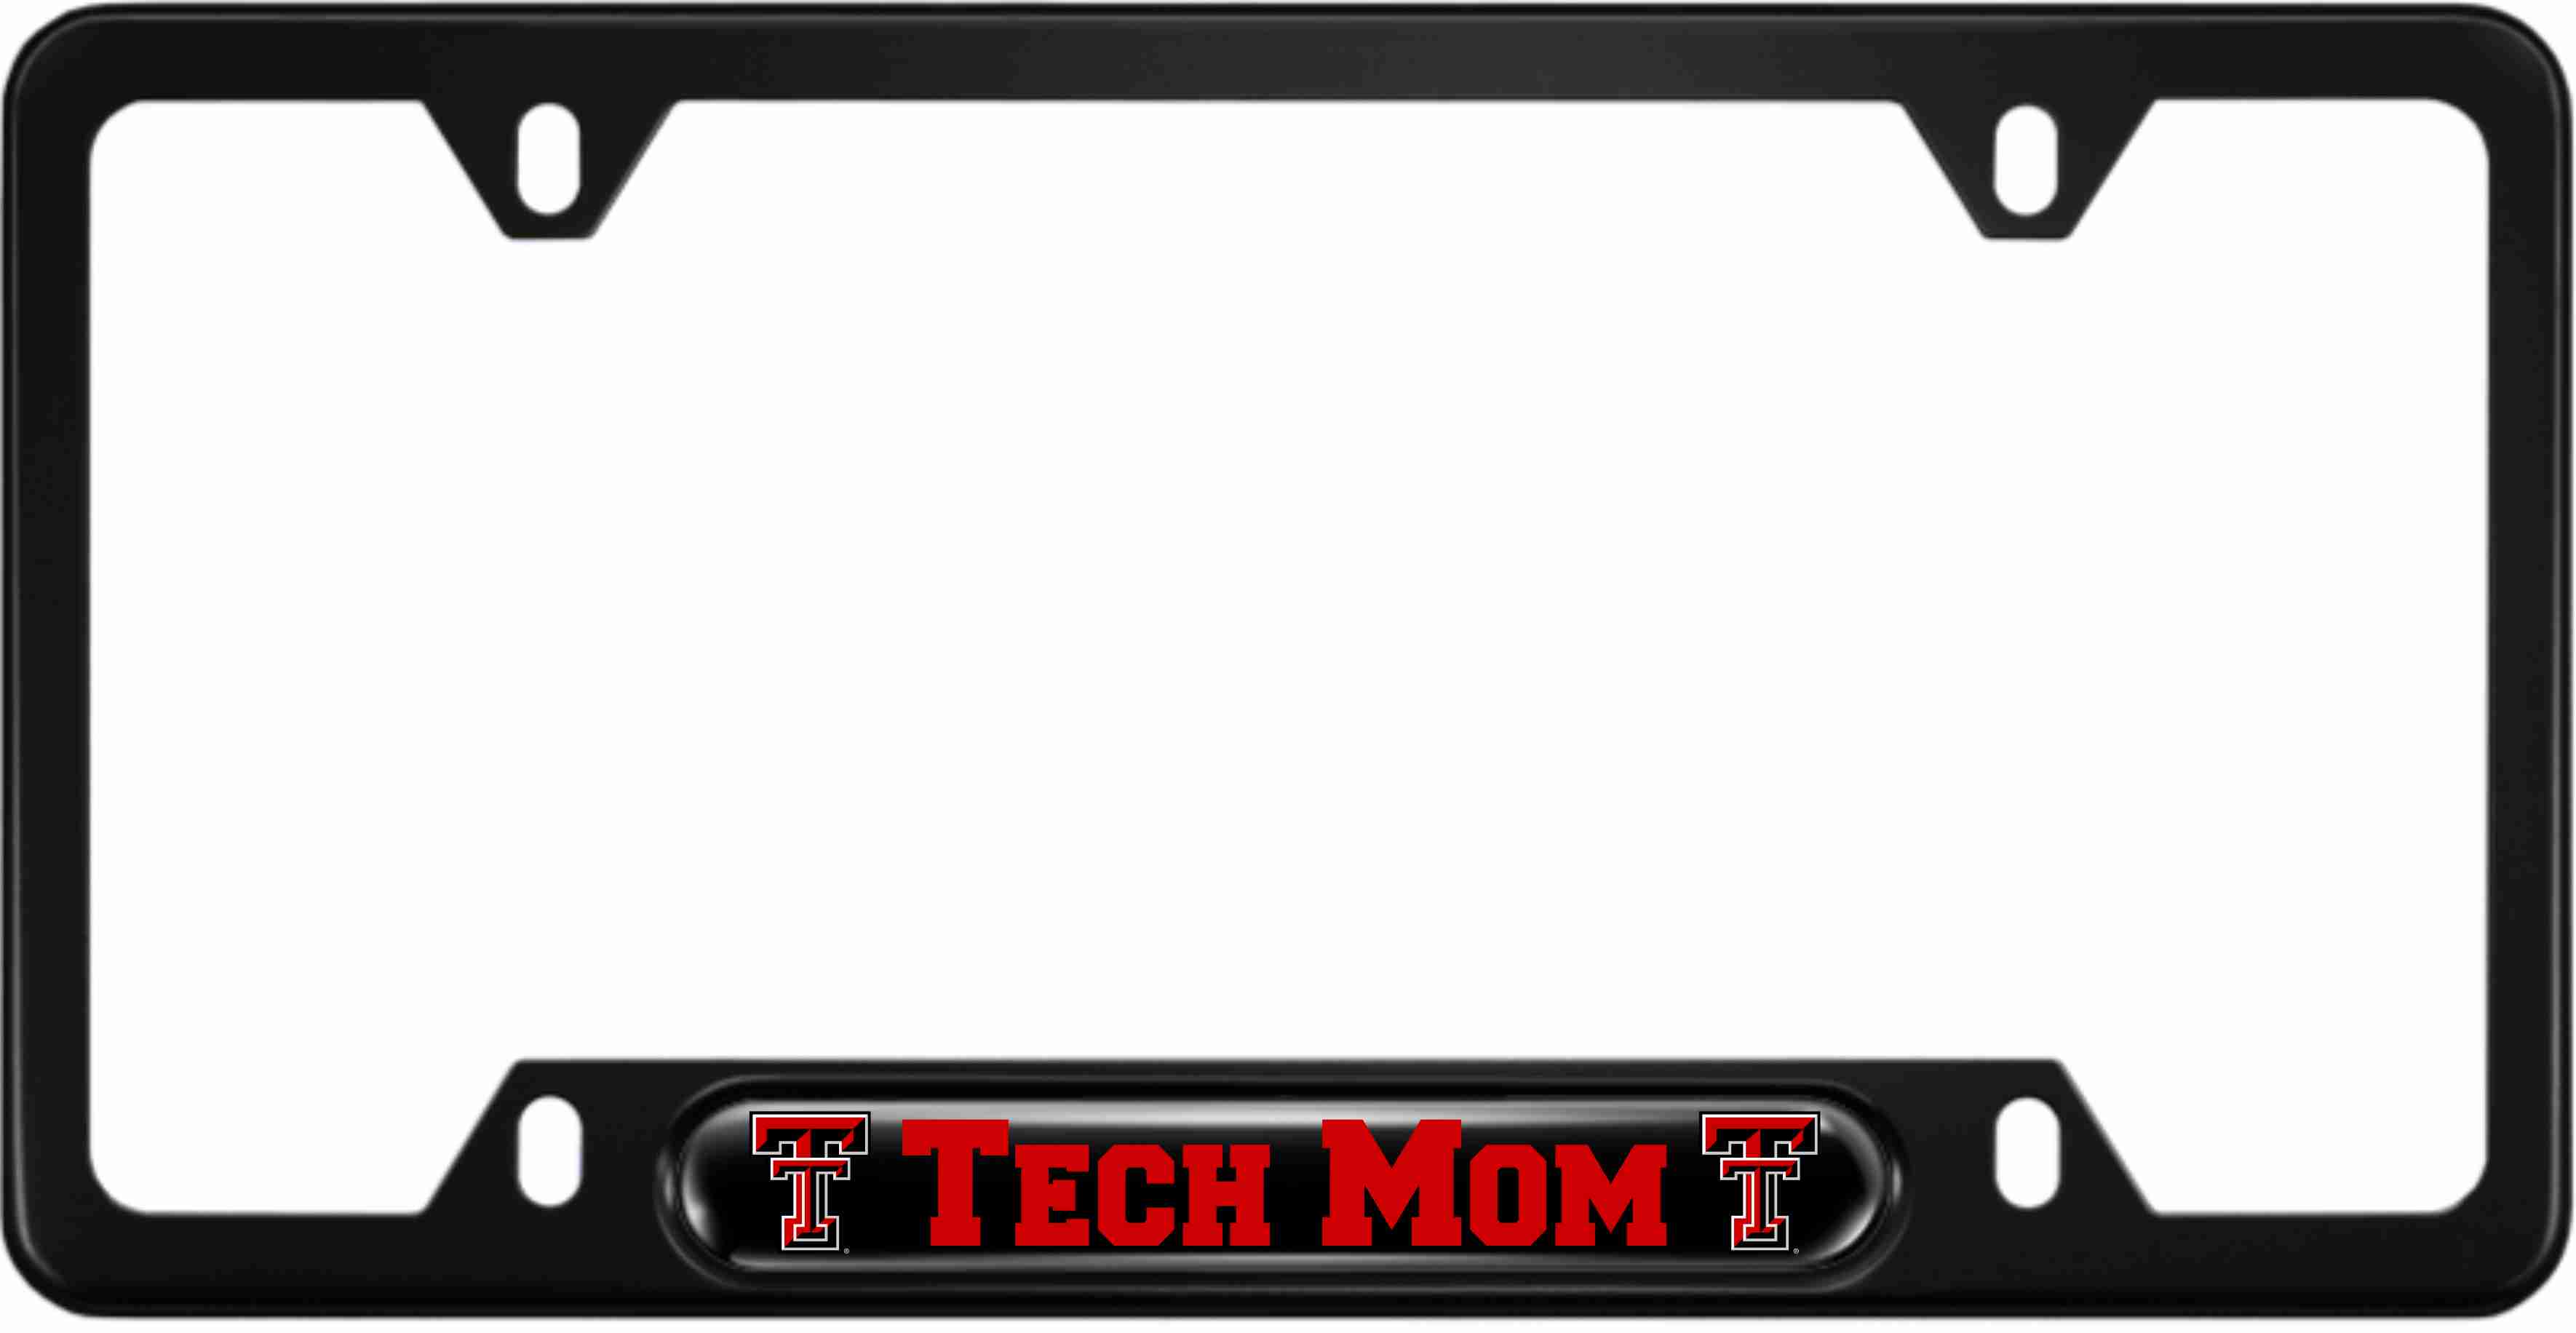 Tech Mom - custom Car aluminum license plate frame - Black